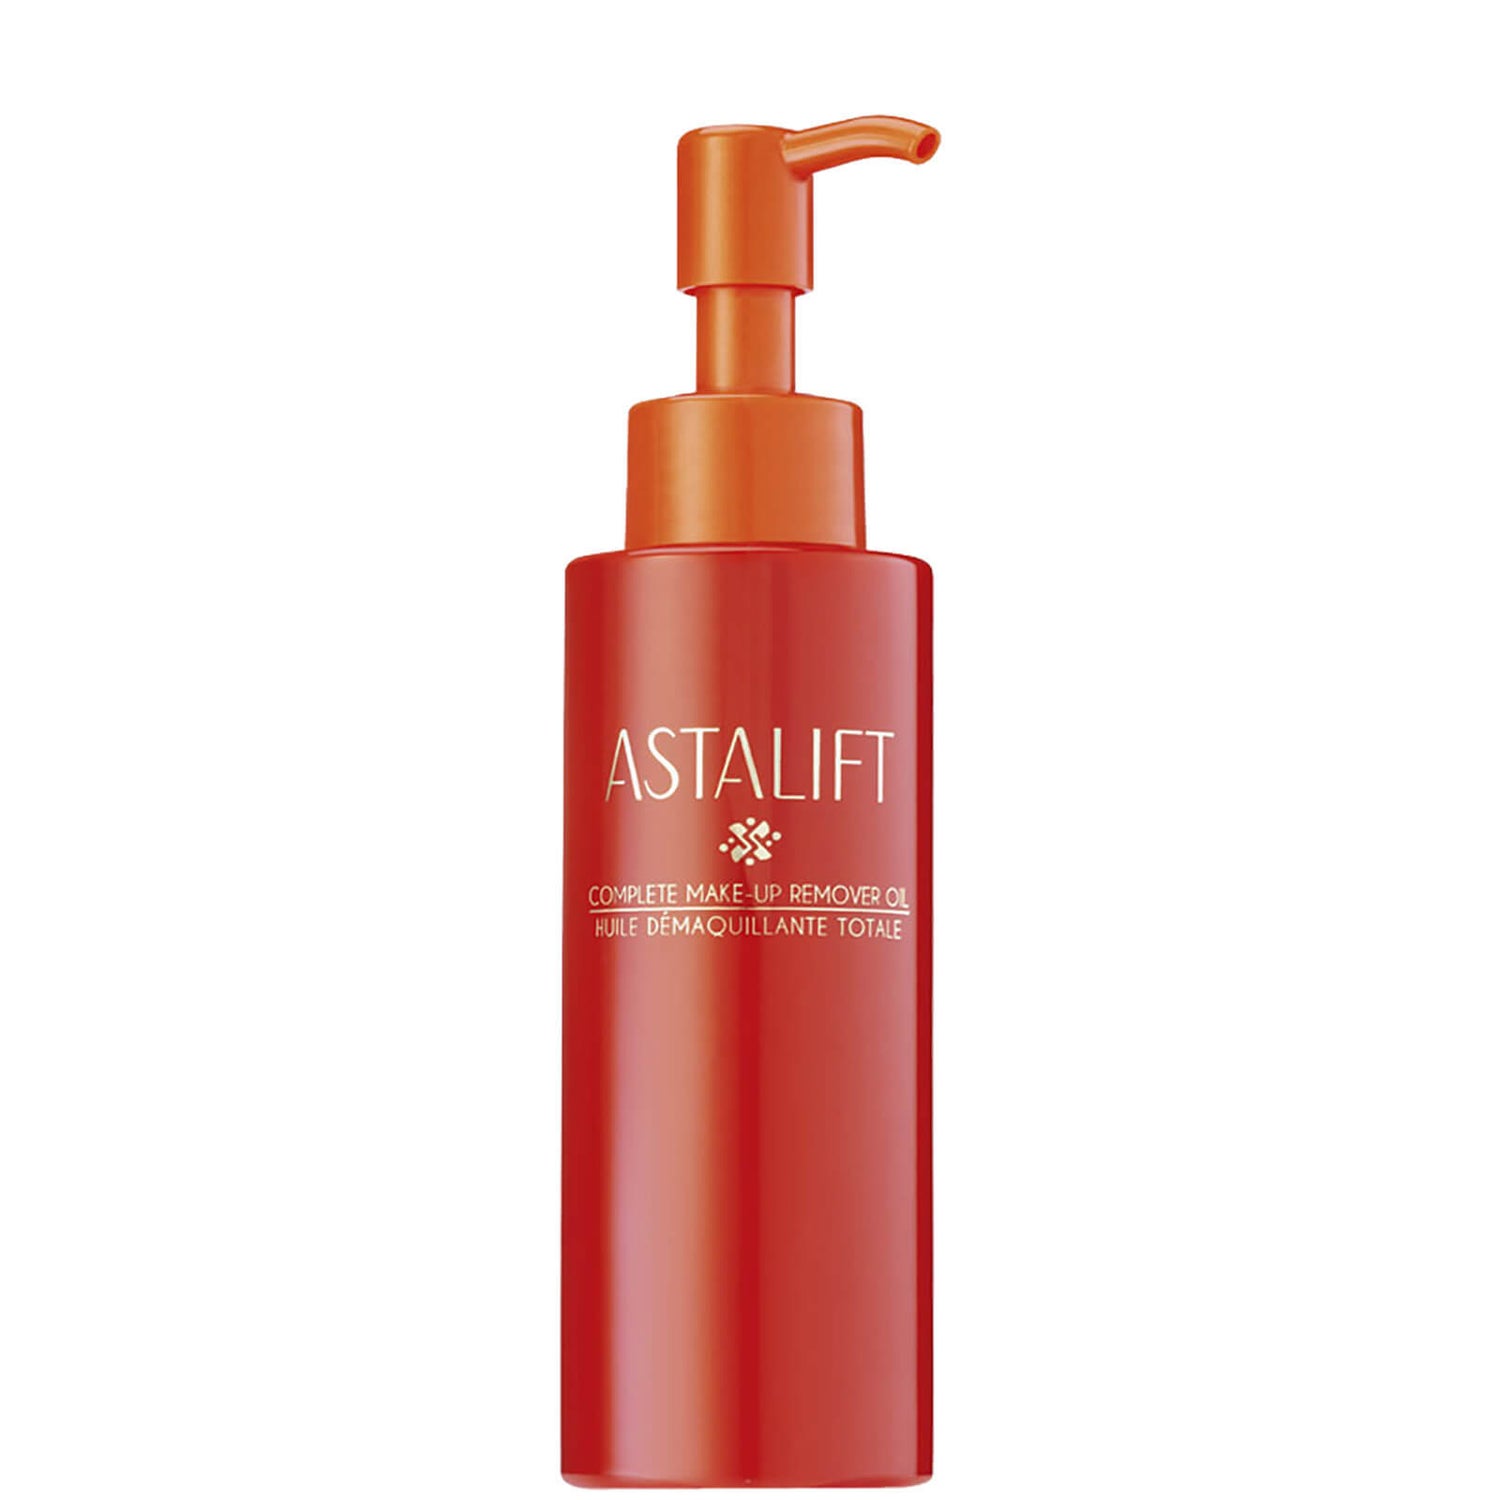 Astalift Complete Make-Up Remover Oil (120ml)